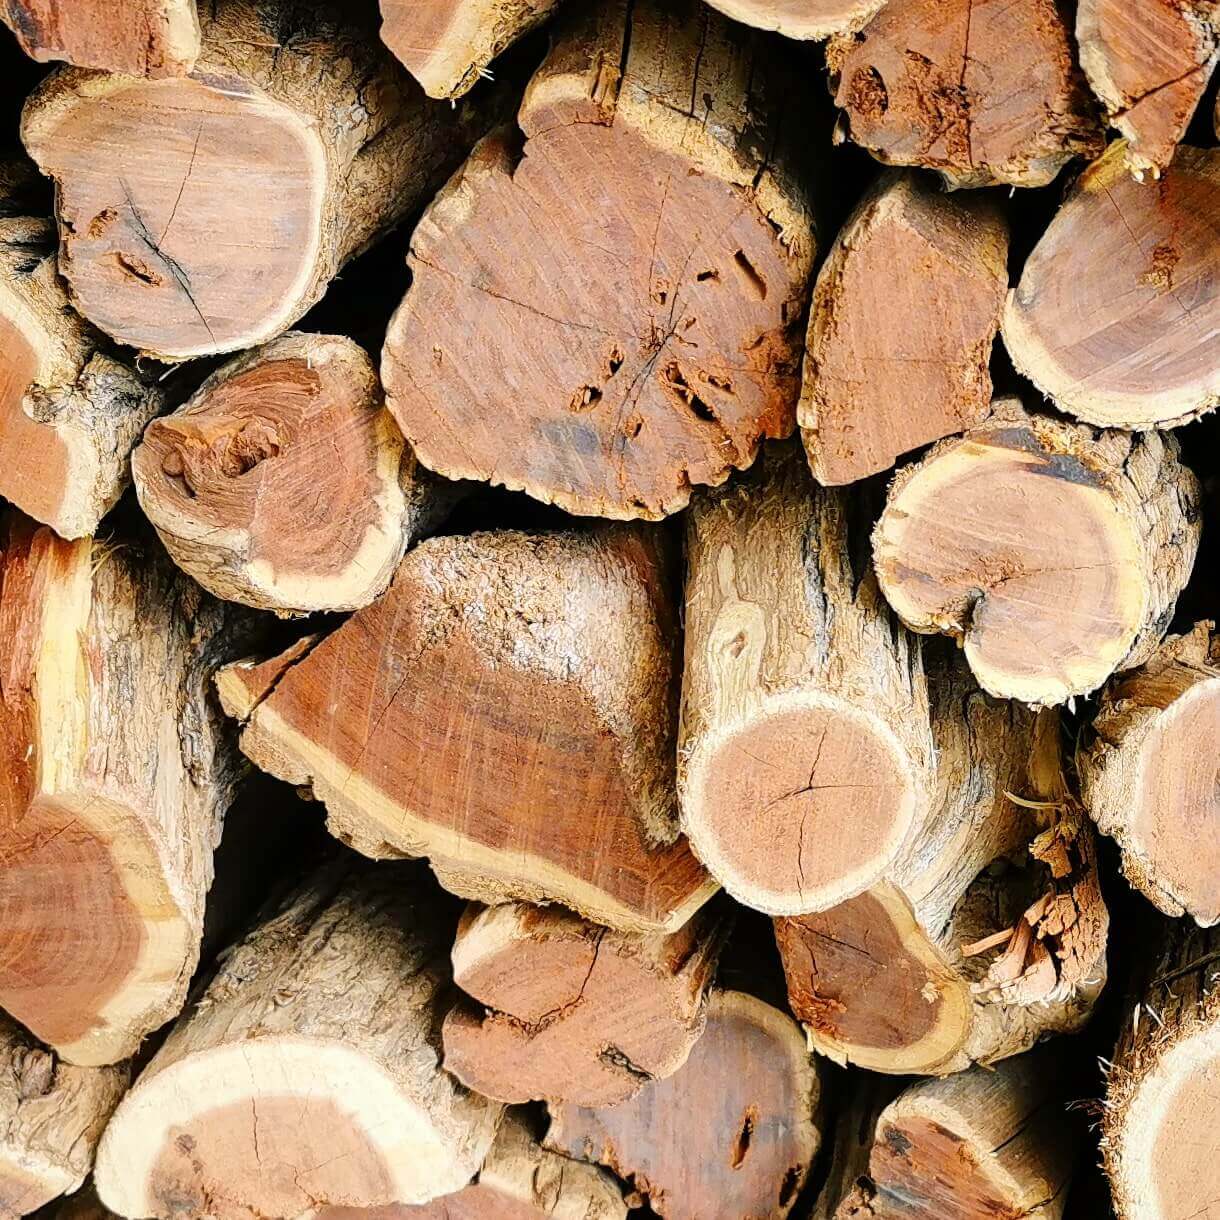 Sekelbos Namibian Hardwood 1500KG Bulk (Sicklebush) | 1.5 Ton - Cape Town Firewood